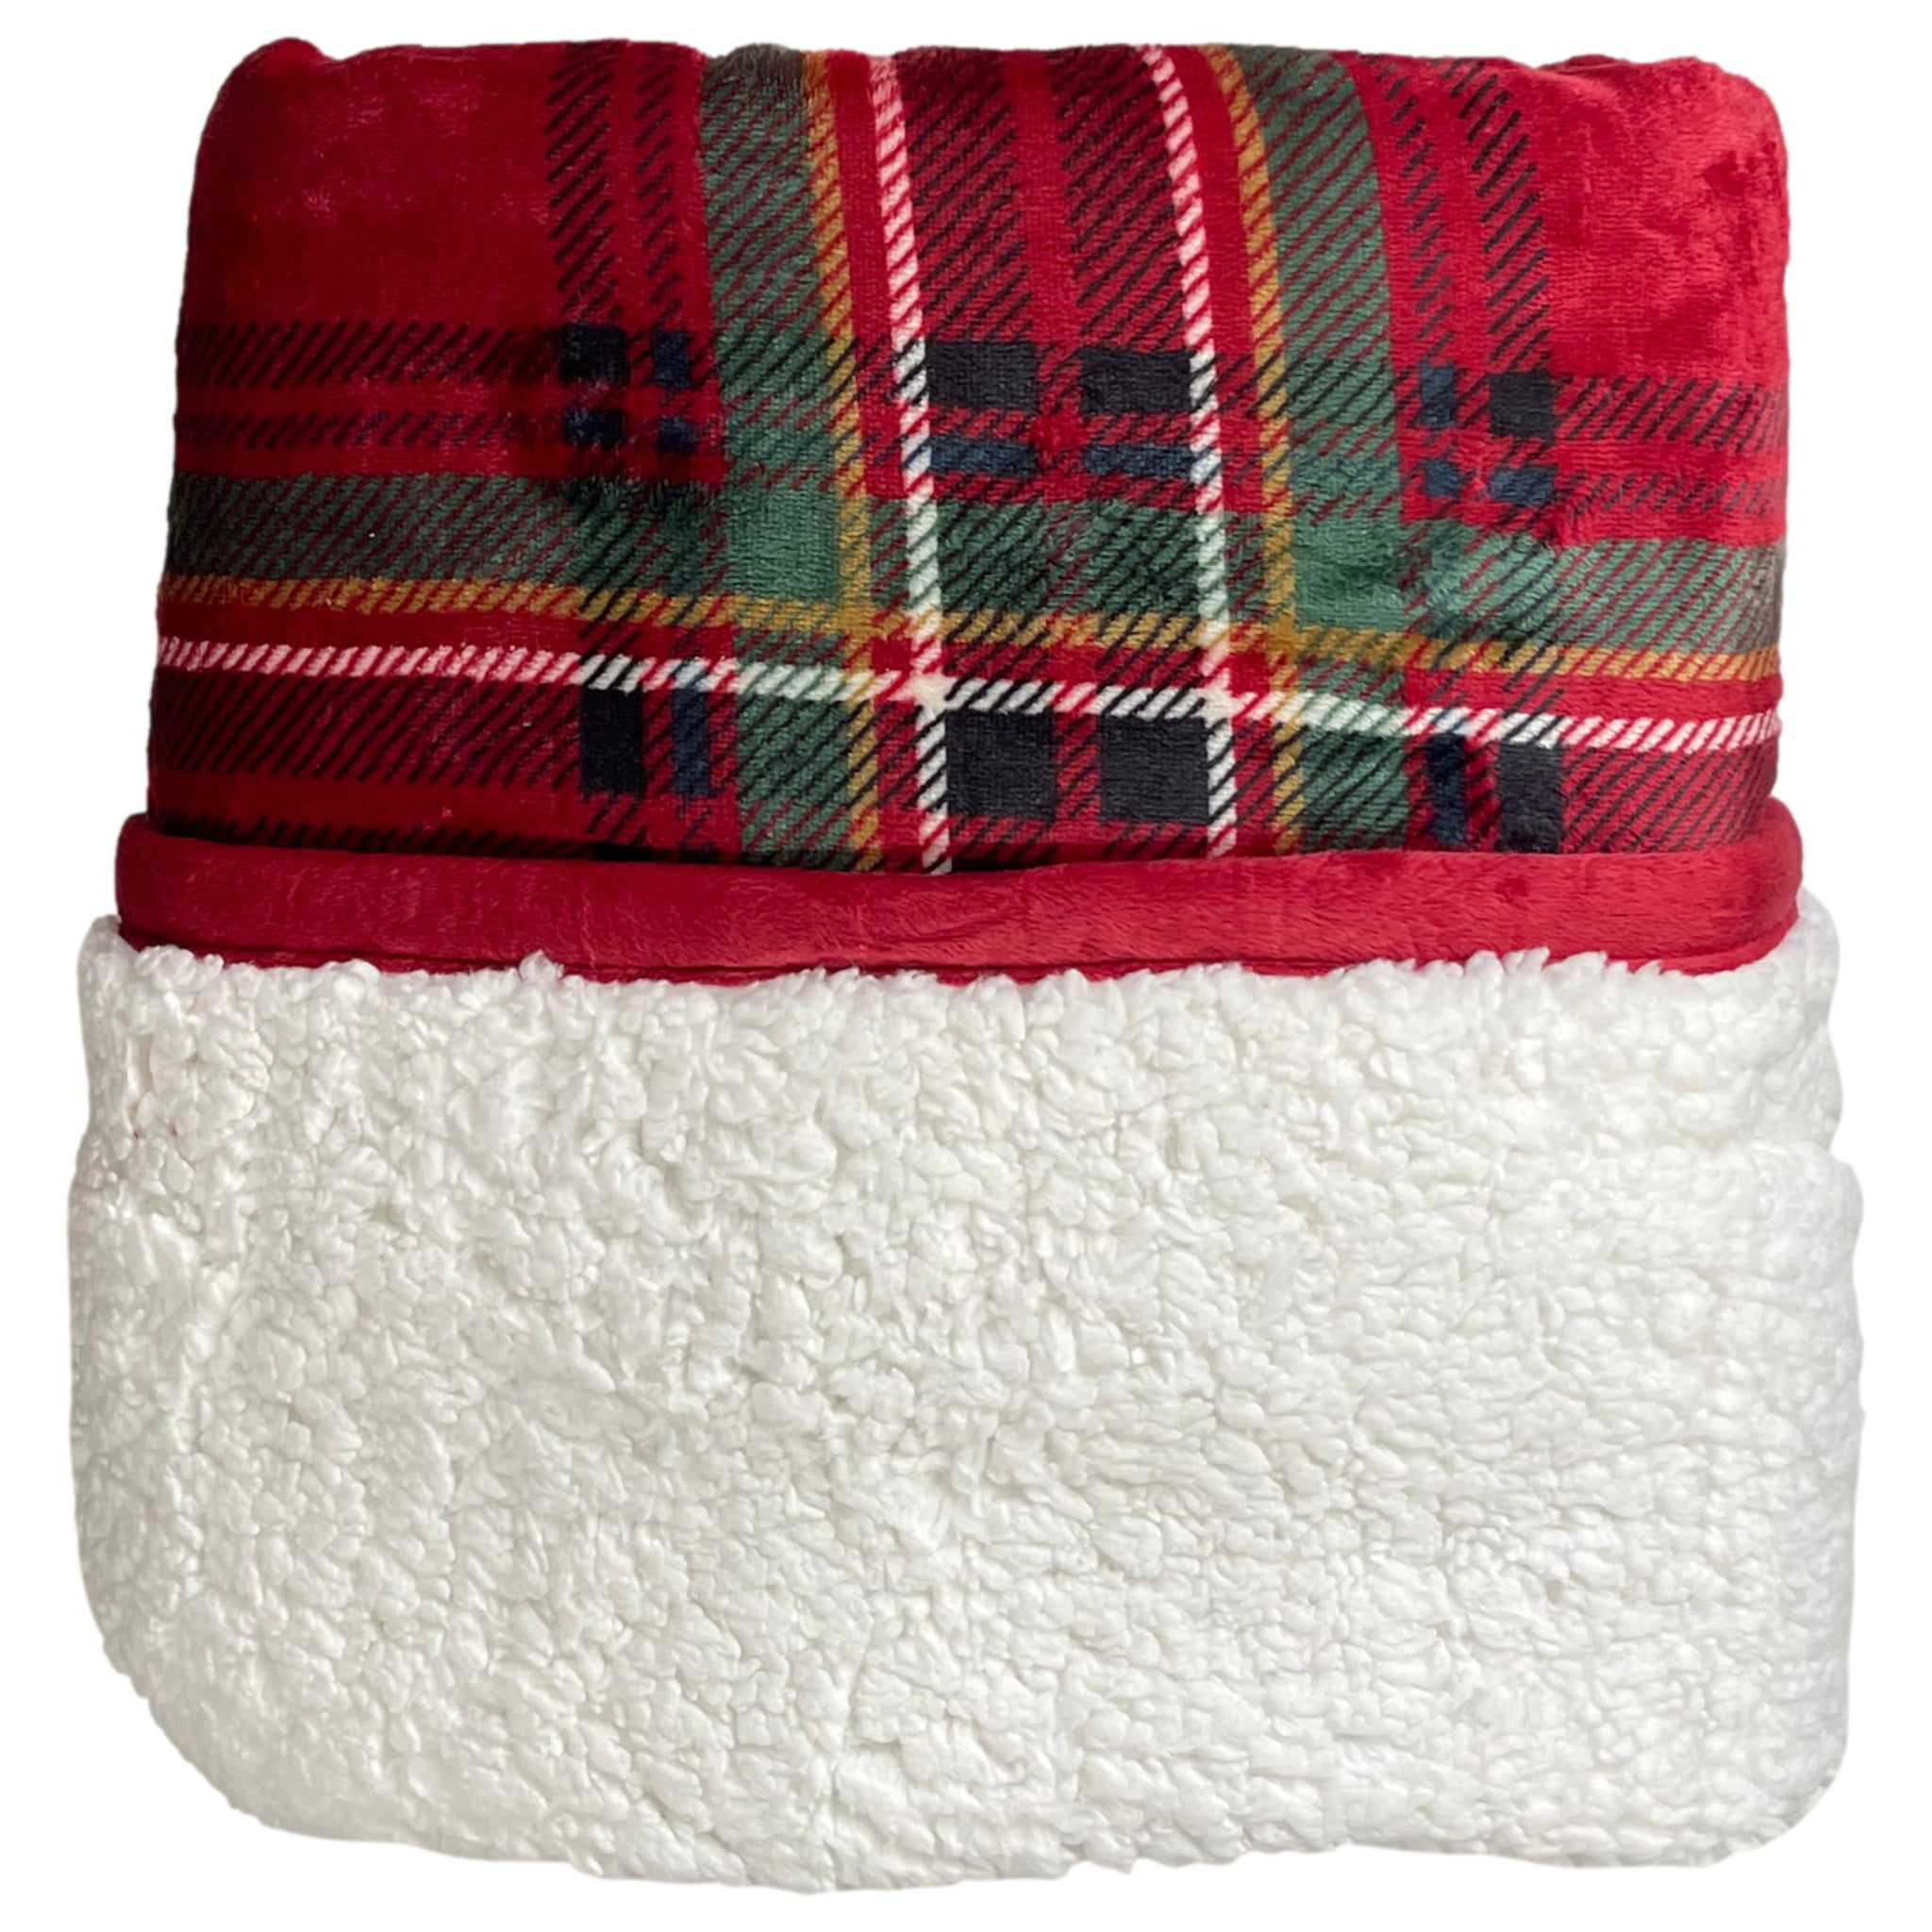 Cuddle Duds Classic Red Plaid Microplush & Sherpa Fleece Throw Blanket ...